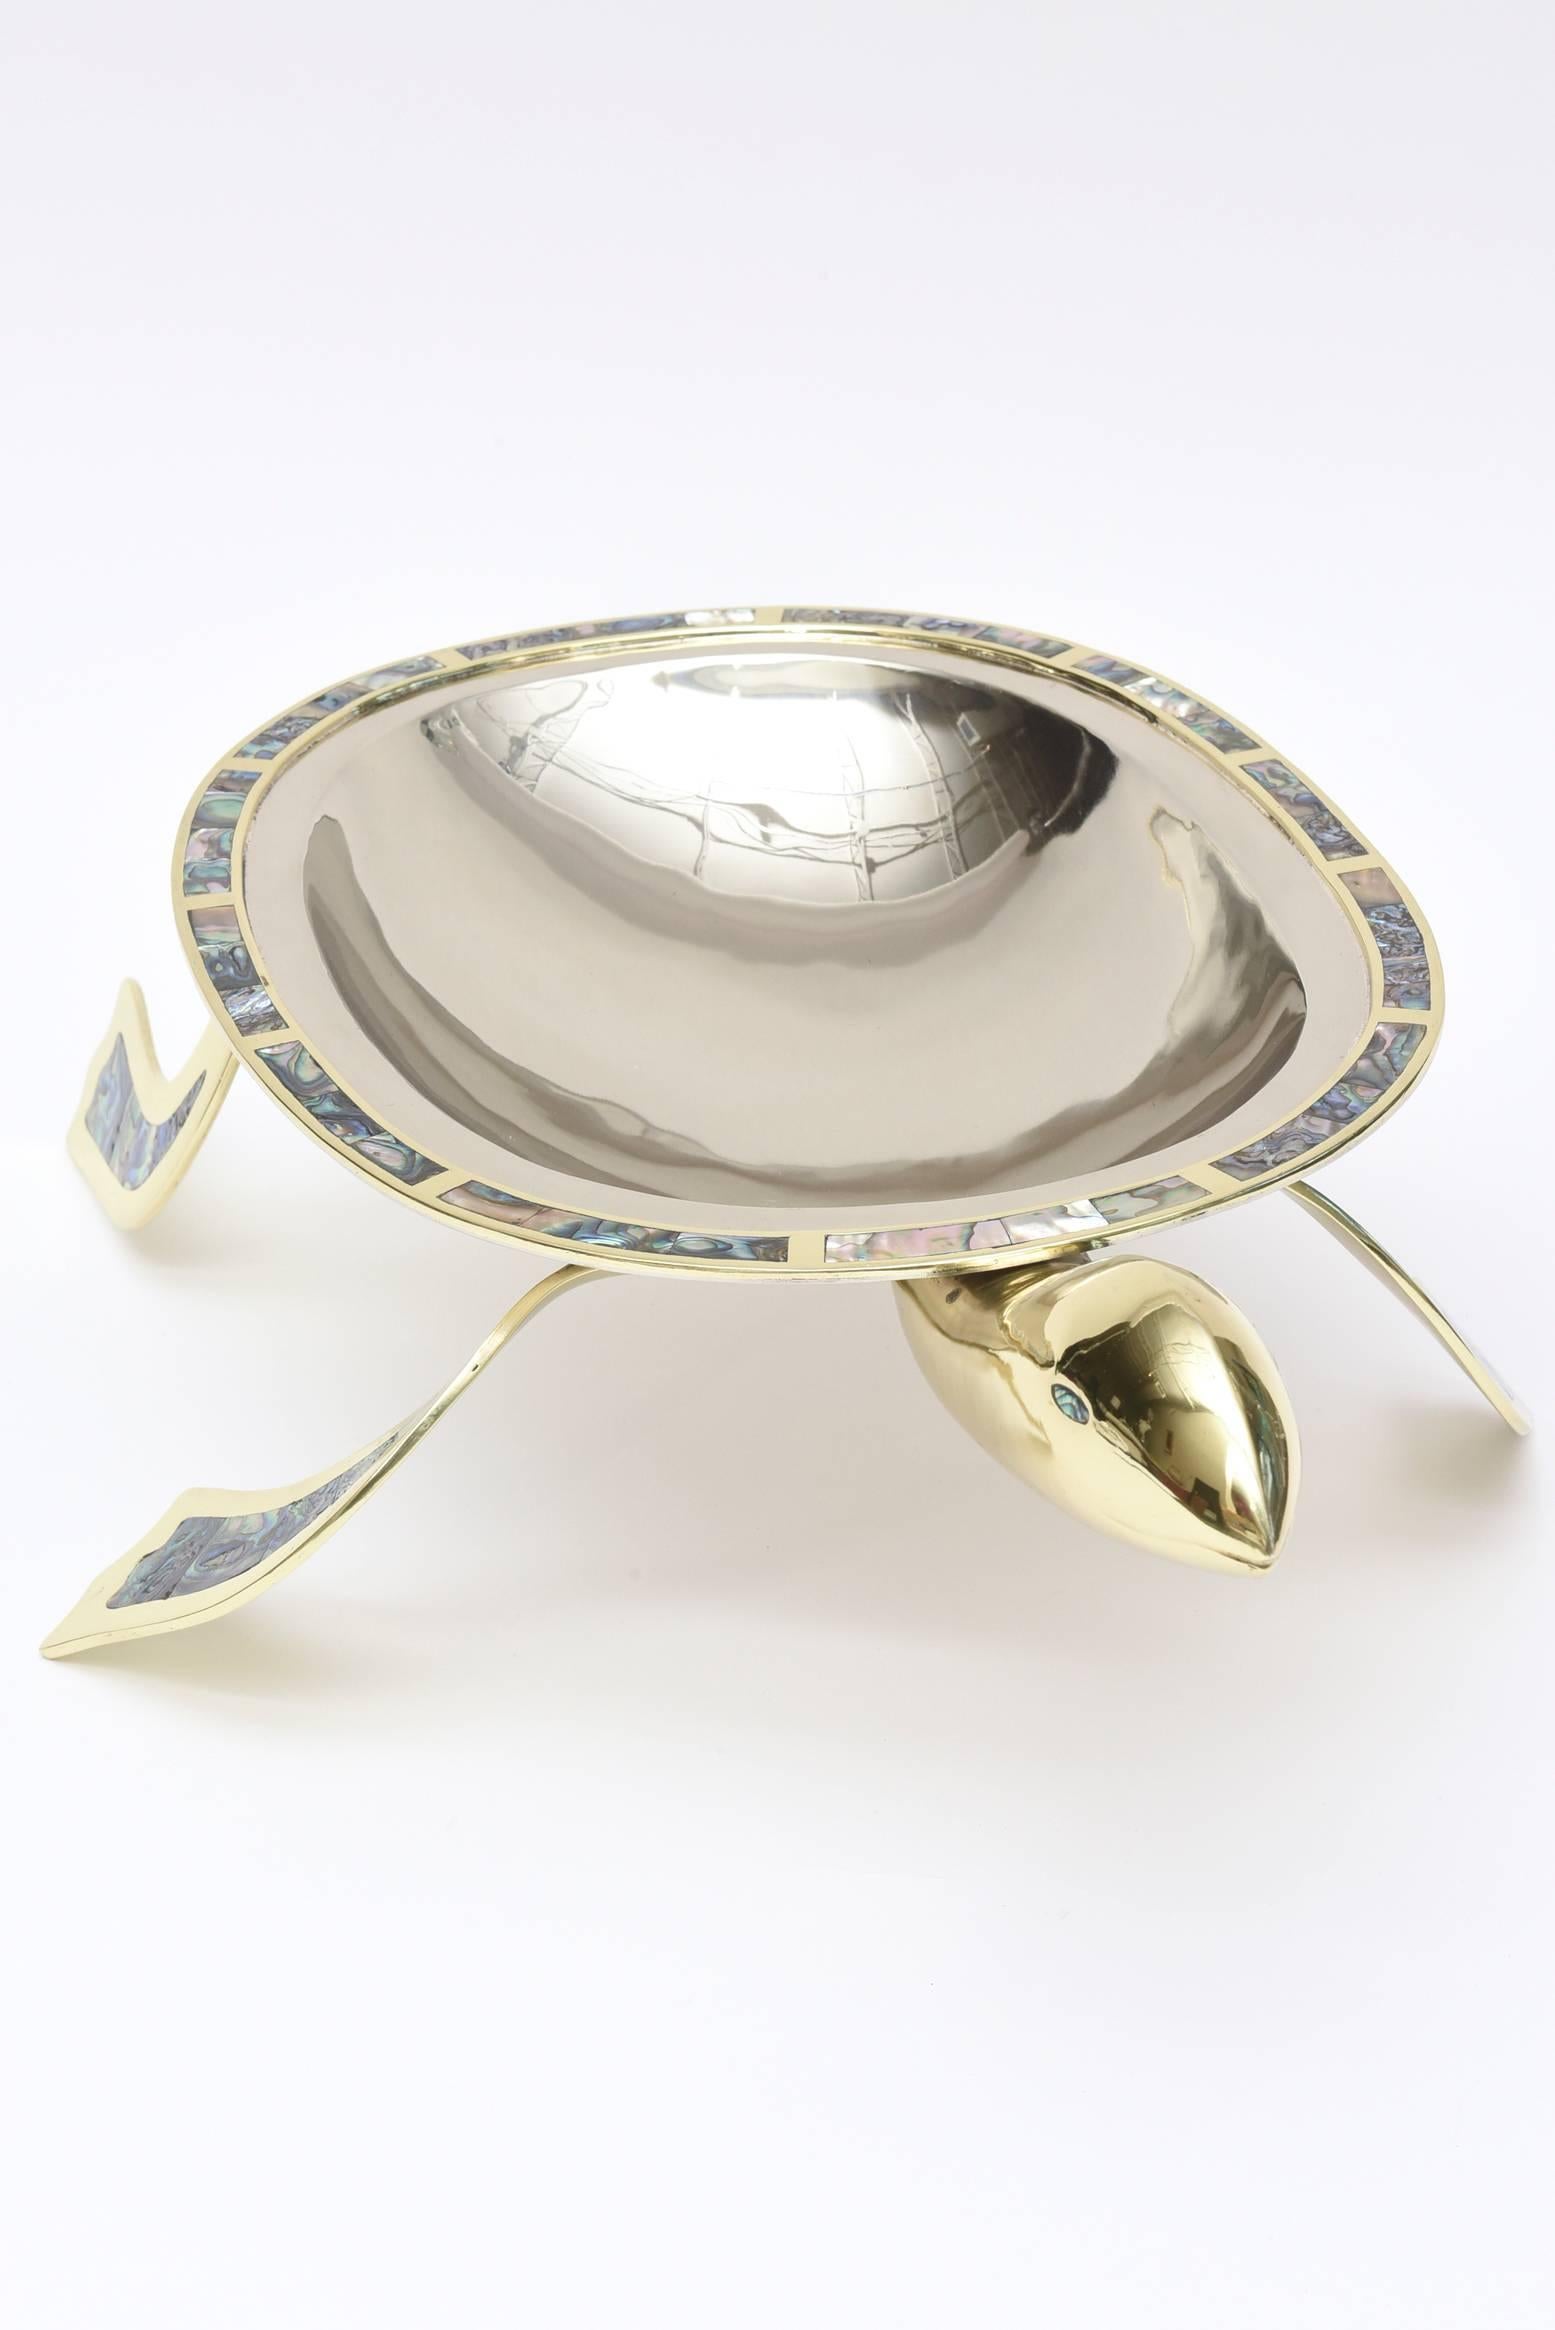 Mexican Los Castillo Abalone Brass Silver Plate Centerpiece Serving Bowl Vintage